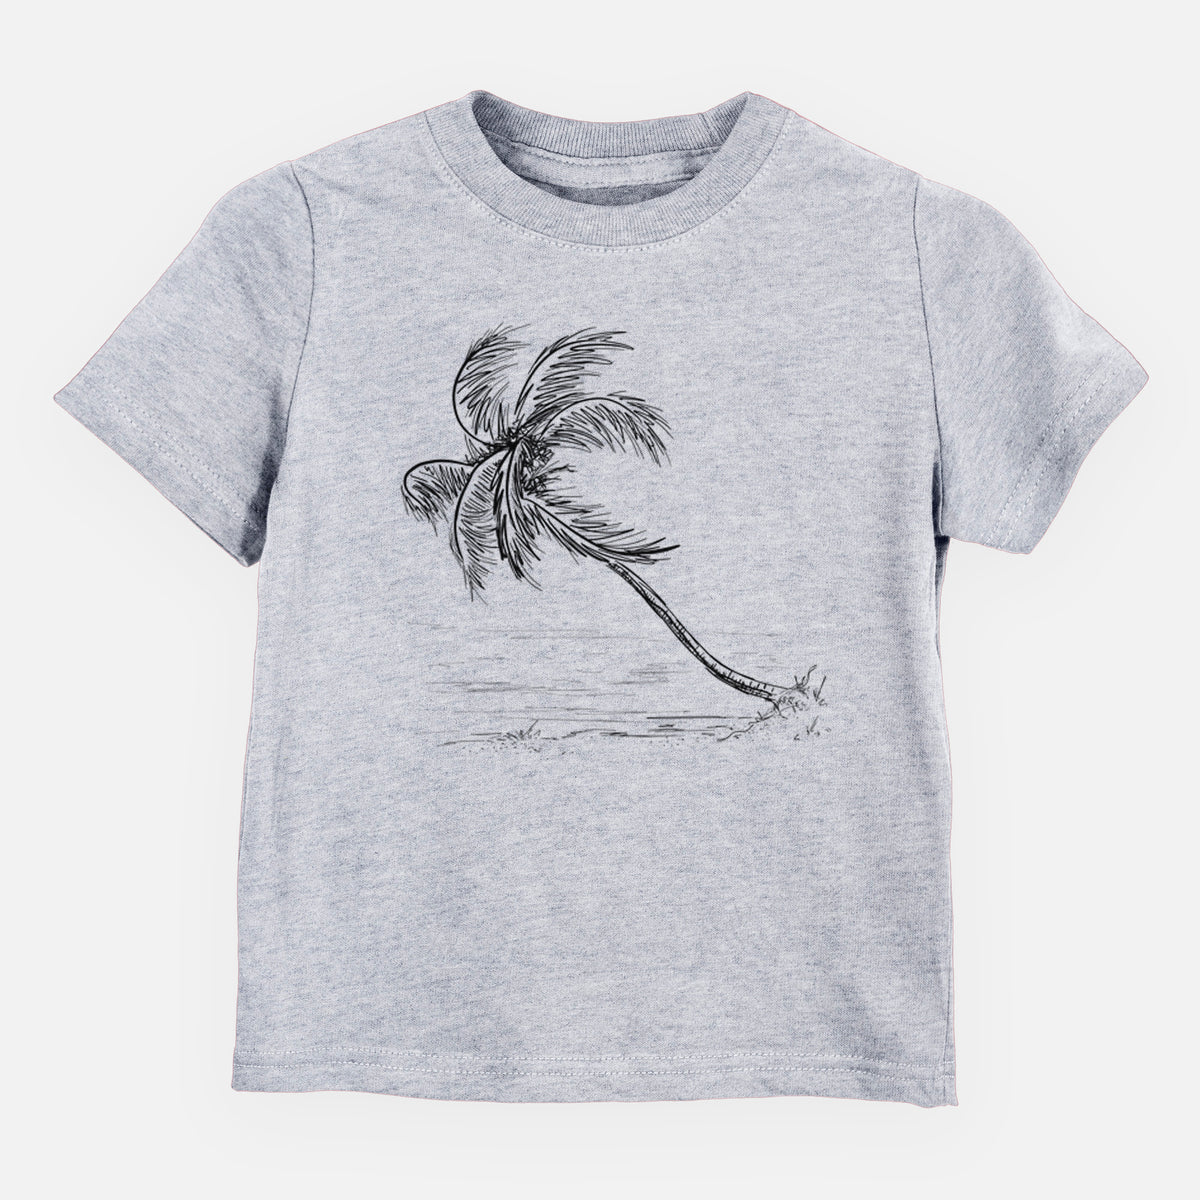 Coconut Palm - Cocos nucifera - Kids Shirt